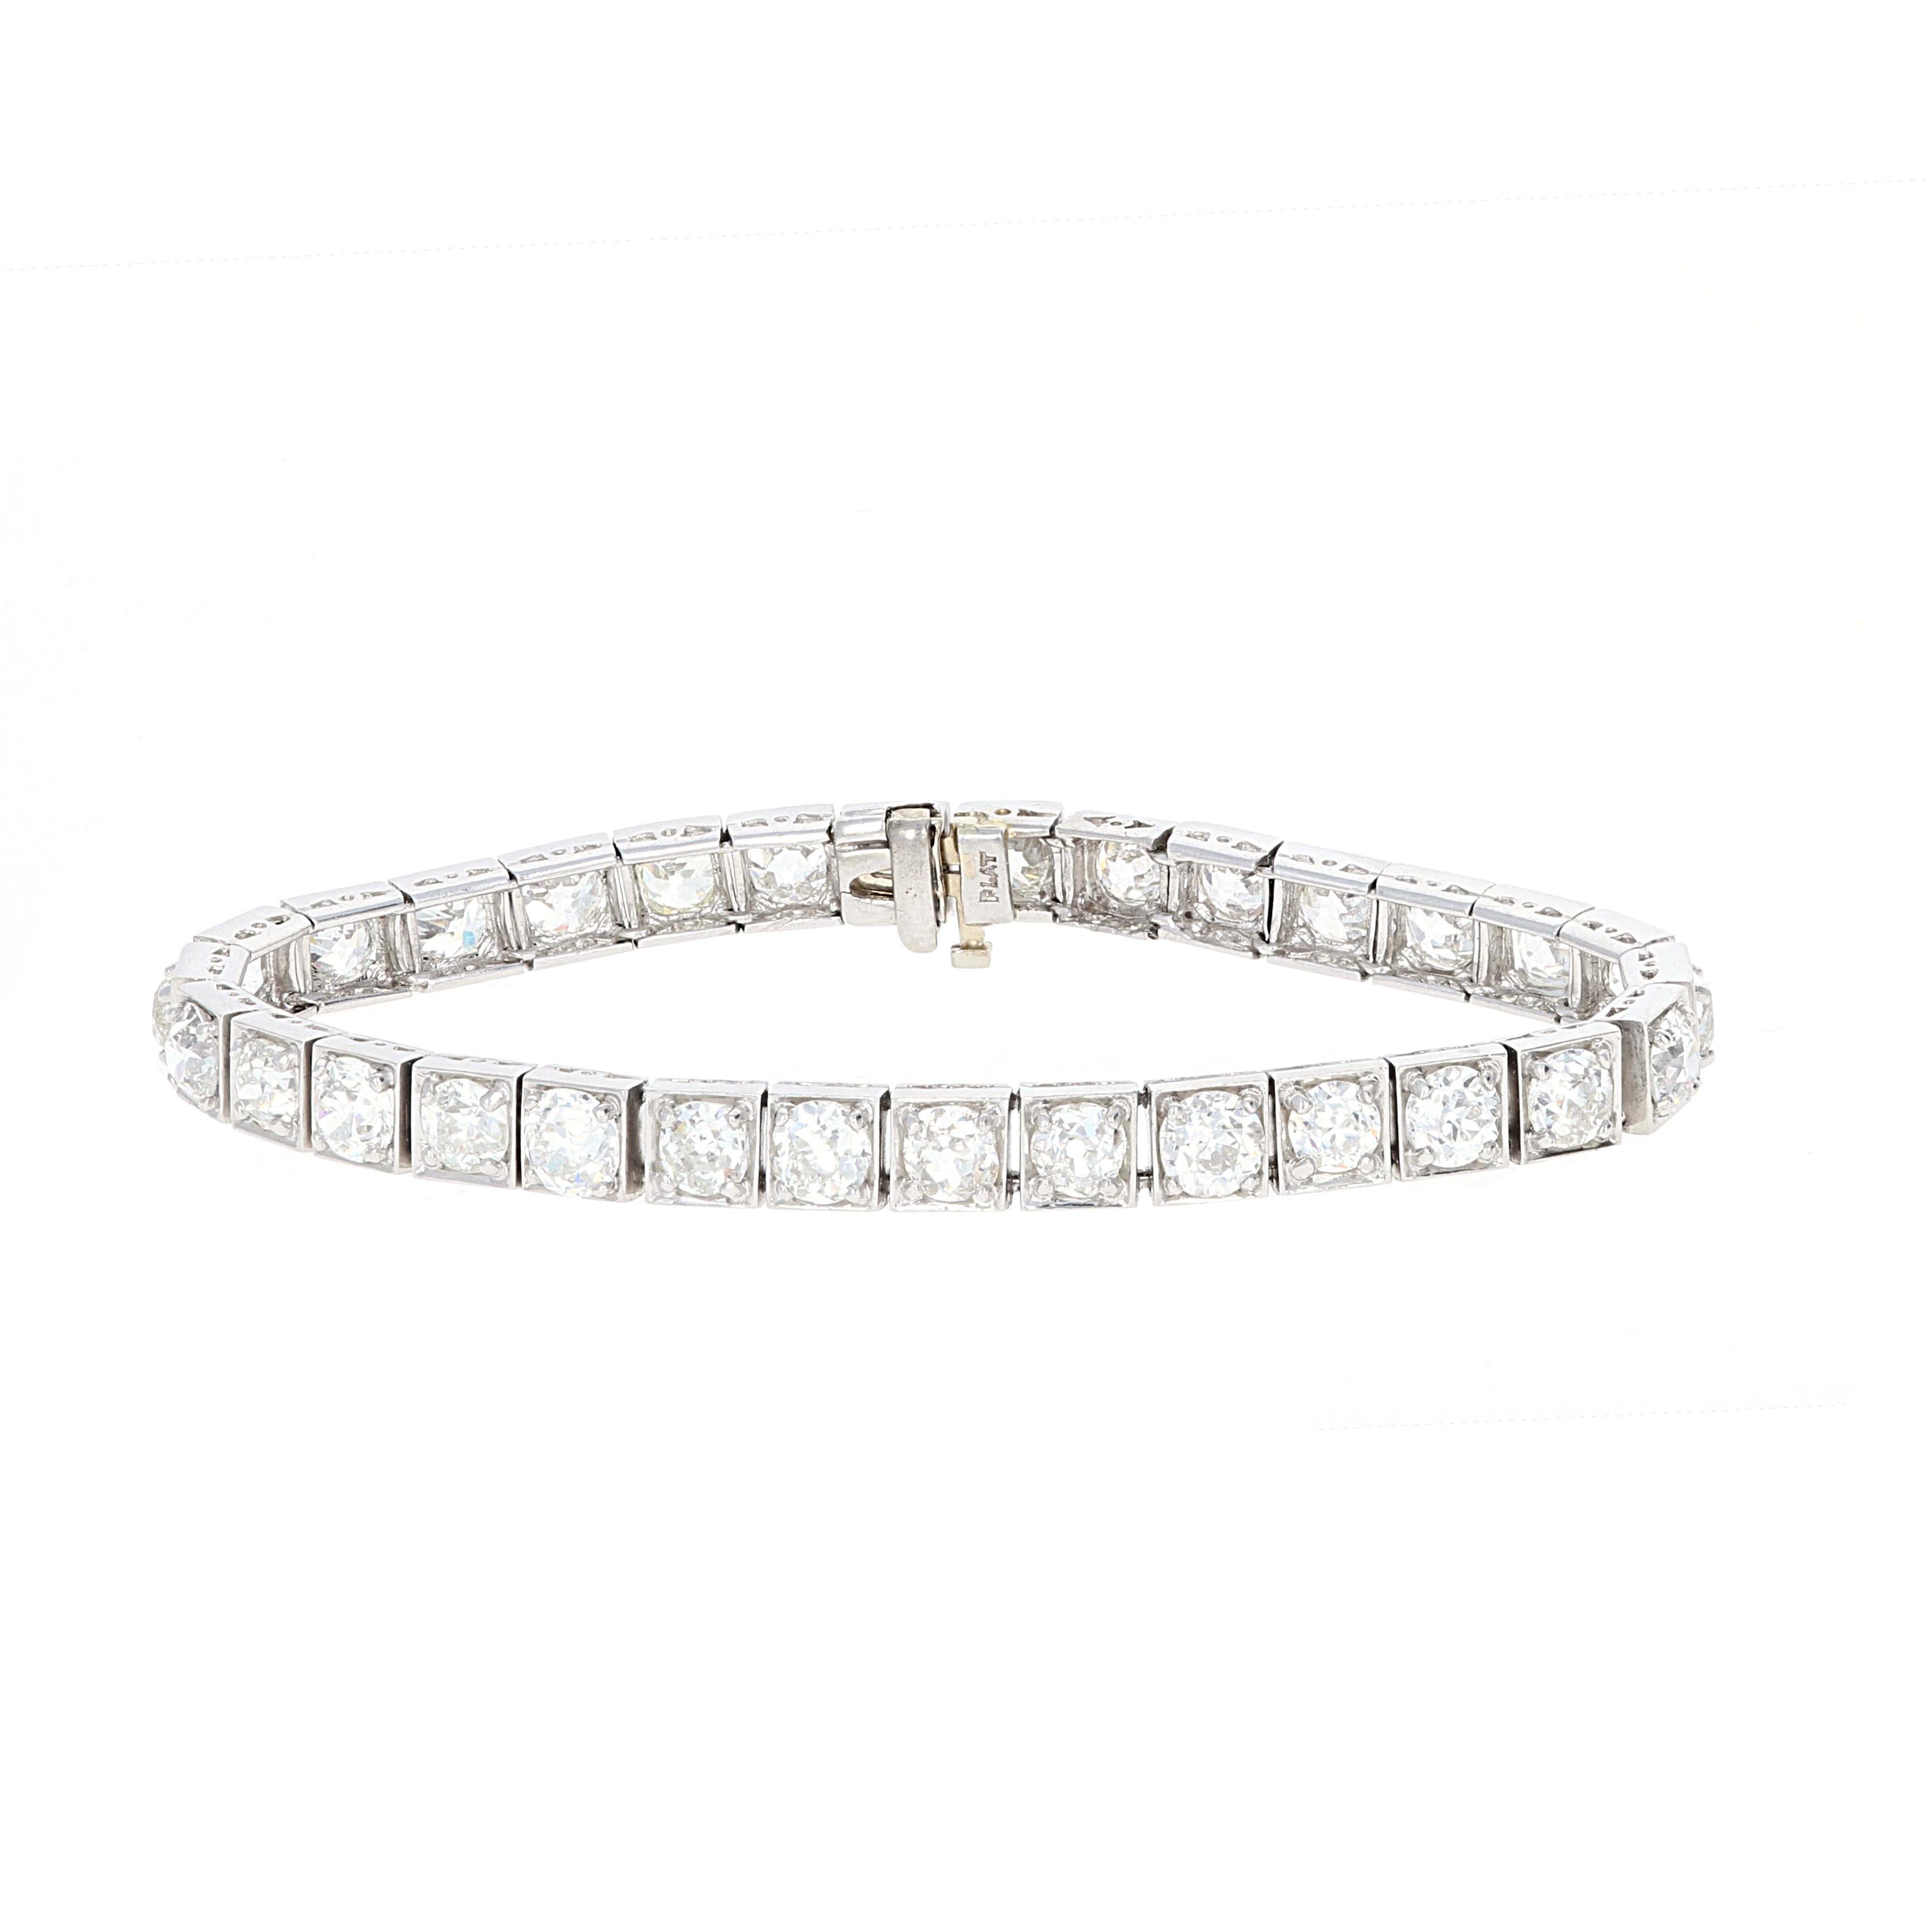 16 carat diamond bracelet